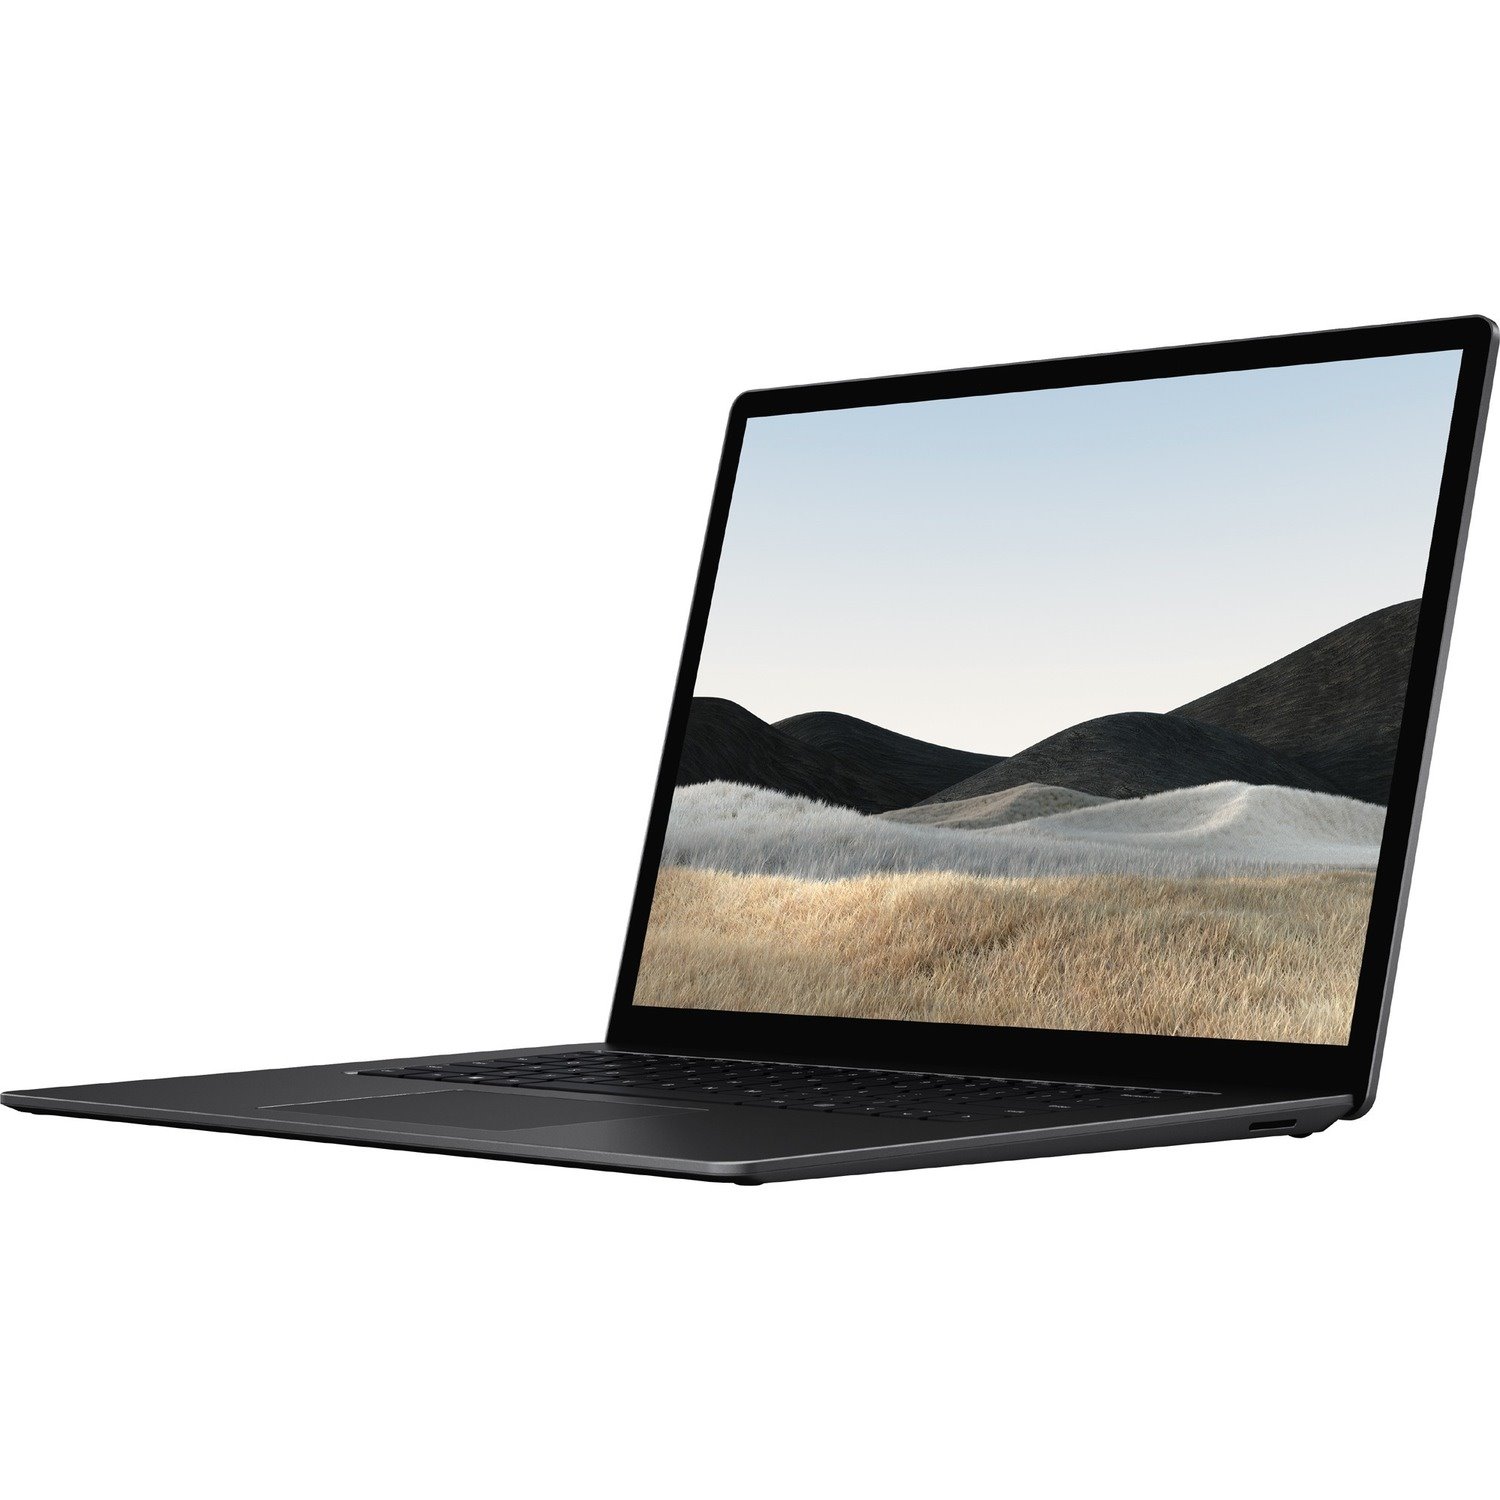 Microsoft Surface Laptop 4 38.1 cm (15") Touchscreen Notebook - 2496 x 1664 - AMD Ryzen 7 4980U Octa-core (8 Core) - 16 GB Total RAM - 512 GB SSD - Matte Black